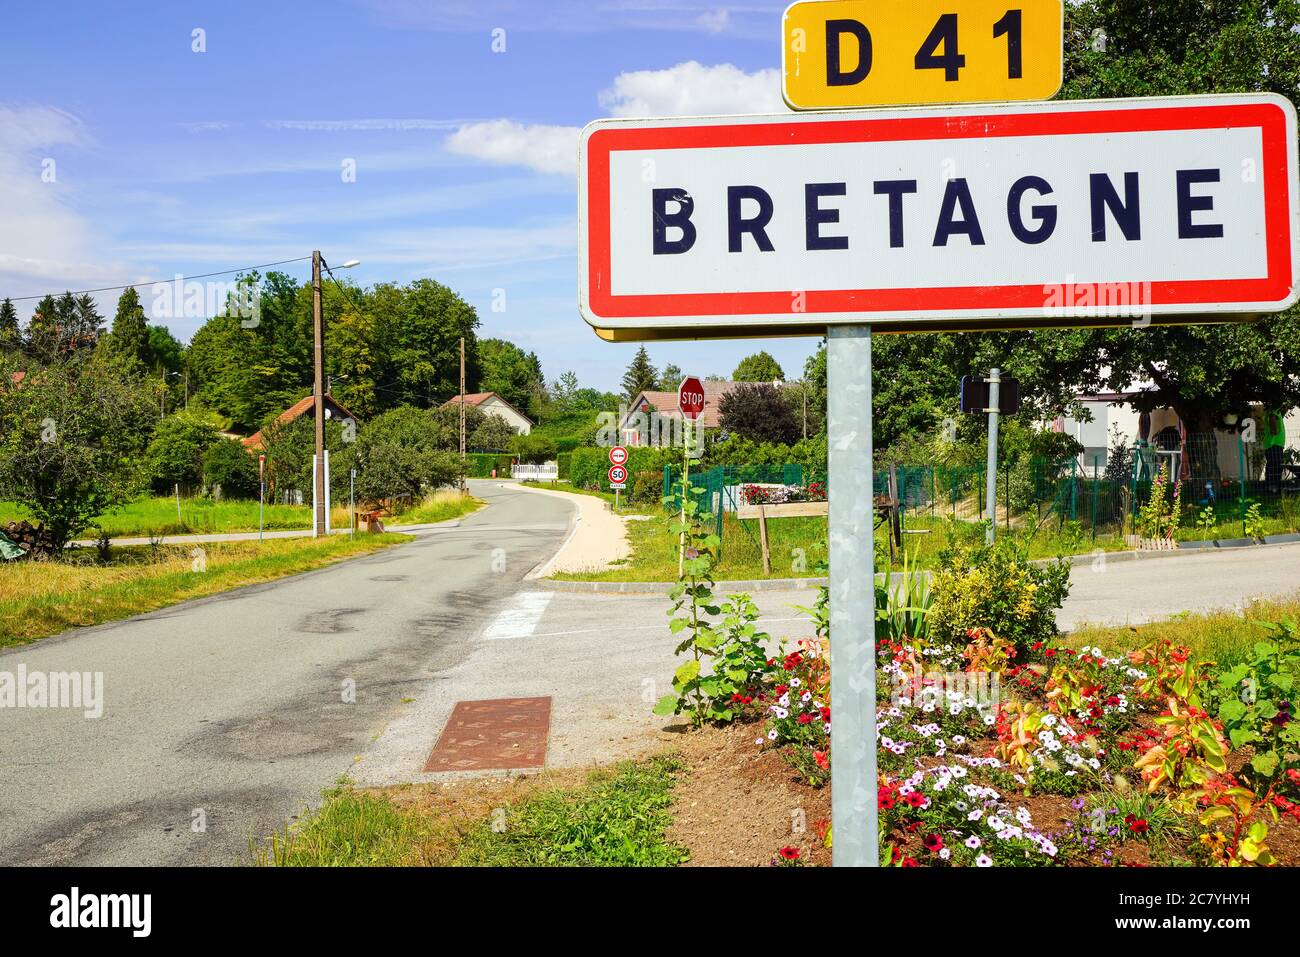 Road sign to village Bretagne. Bretagne is a commune in the Territoire de Belfort department in Bourgogne-Franche-Comté in northeastern France. Stock Photo